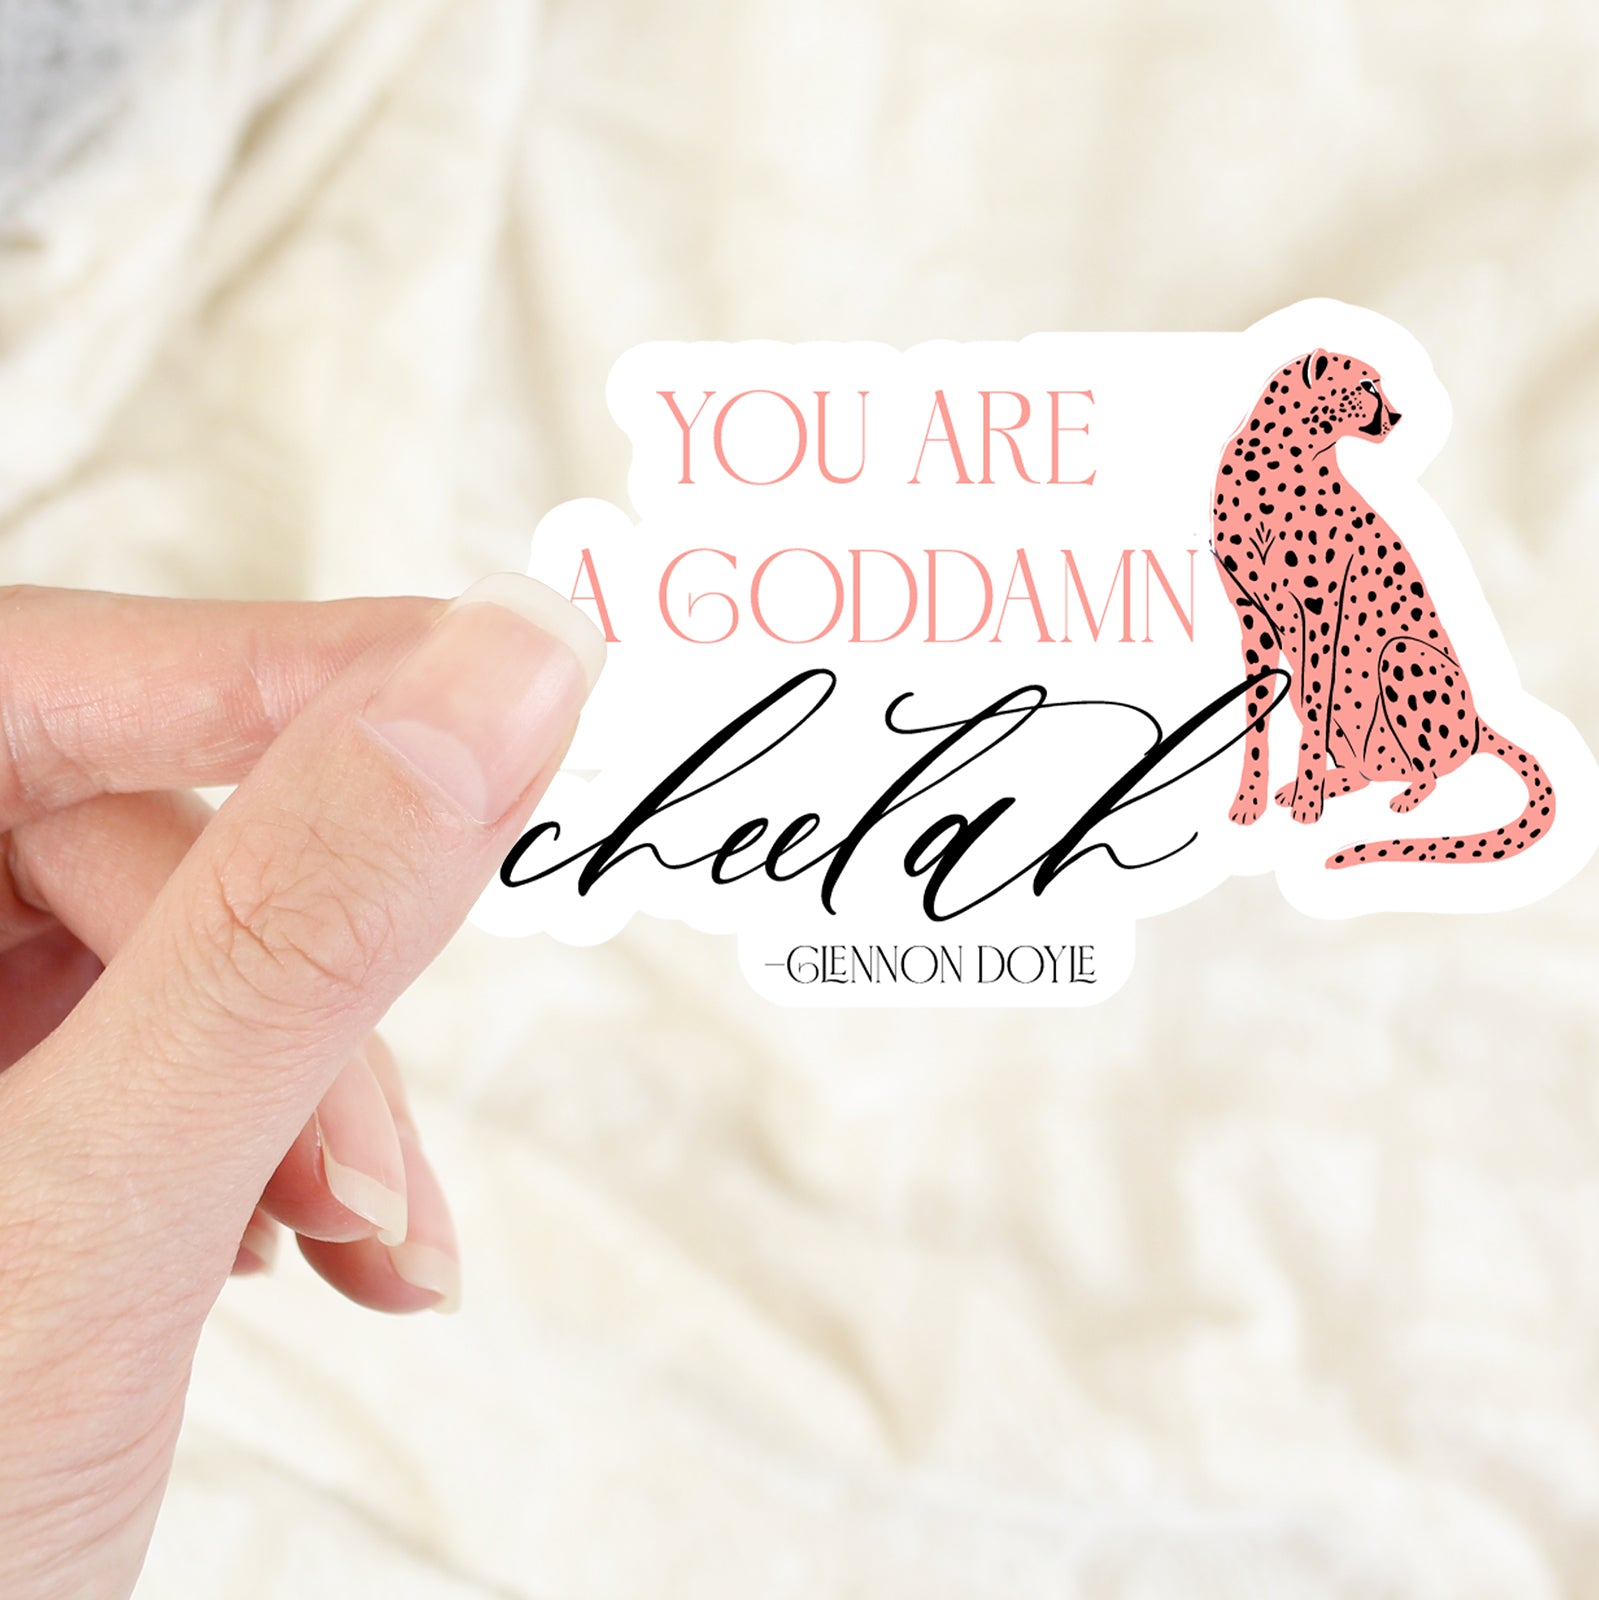 Sticker-You Are a Goddamn Cheetah